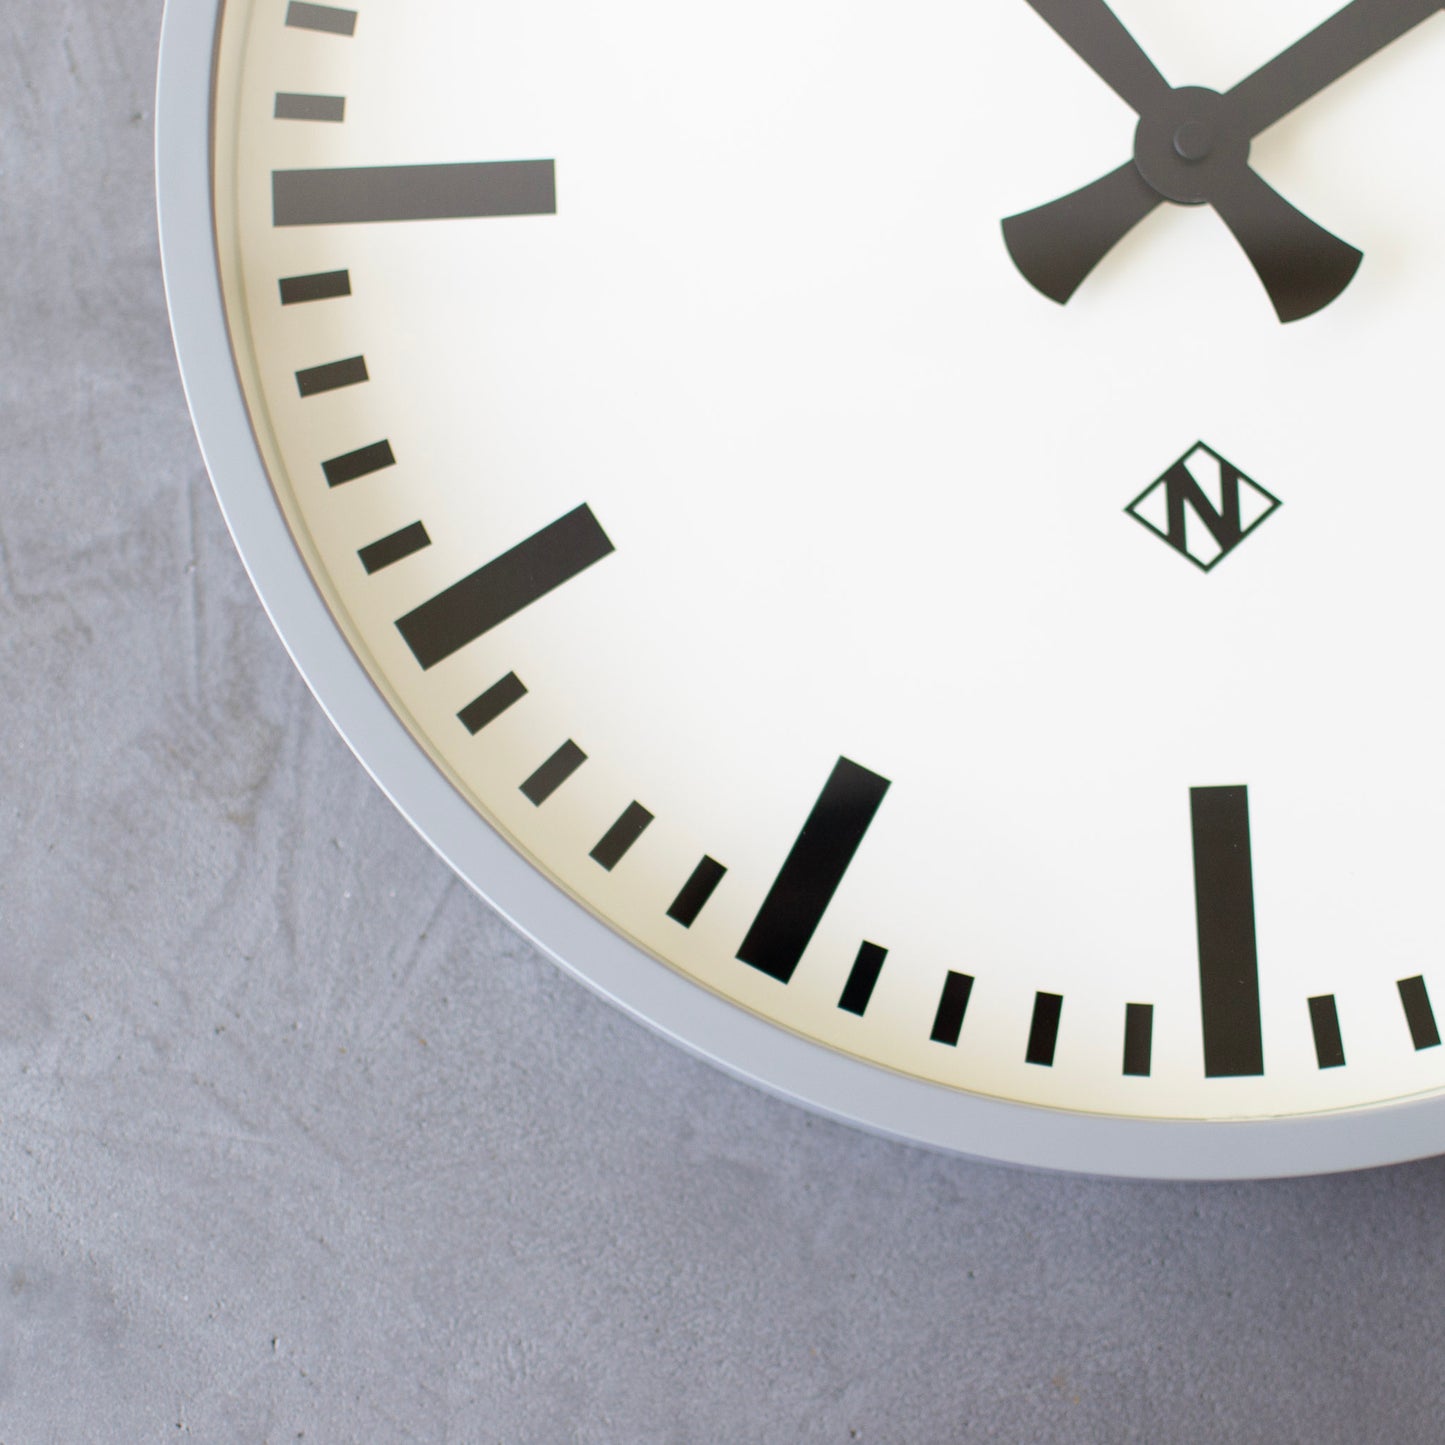 【NEWGATE】Number Three clock - Railway Clock Posh Gray